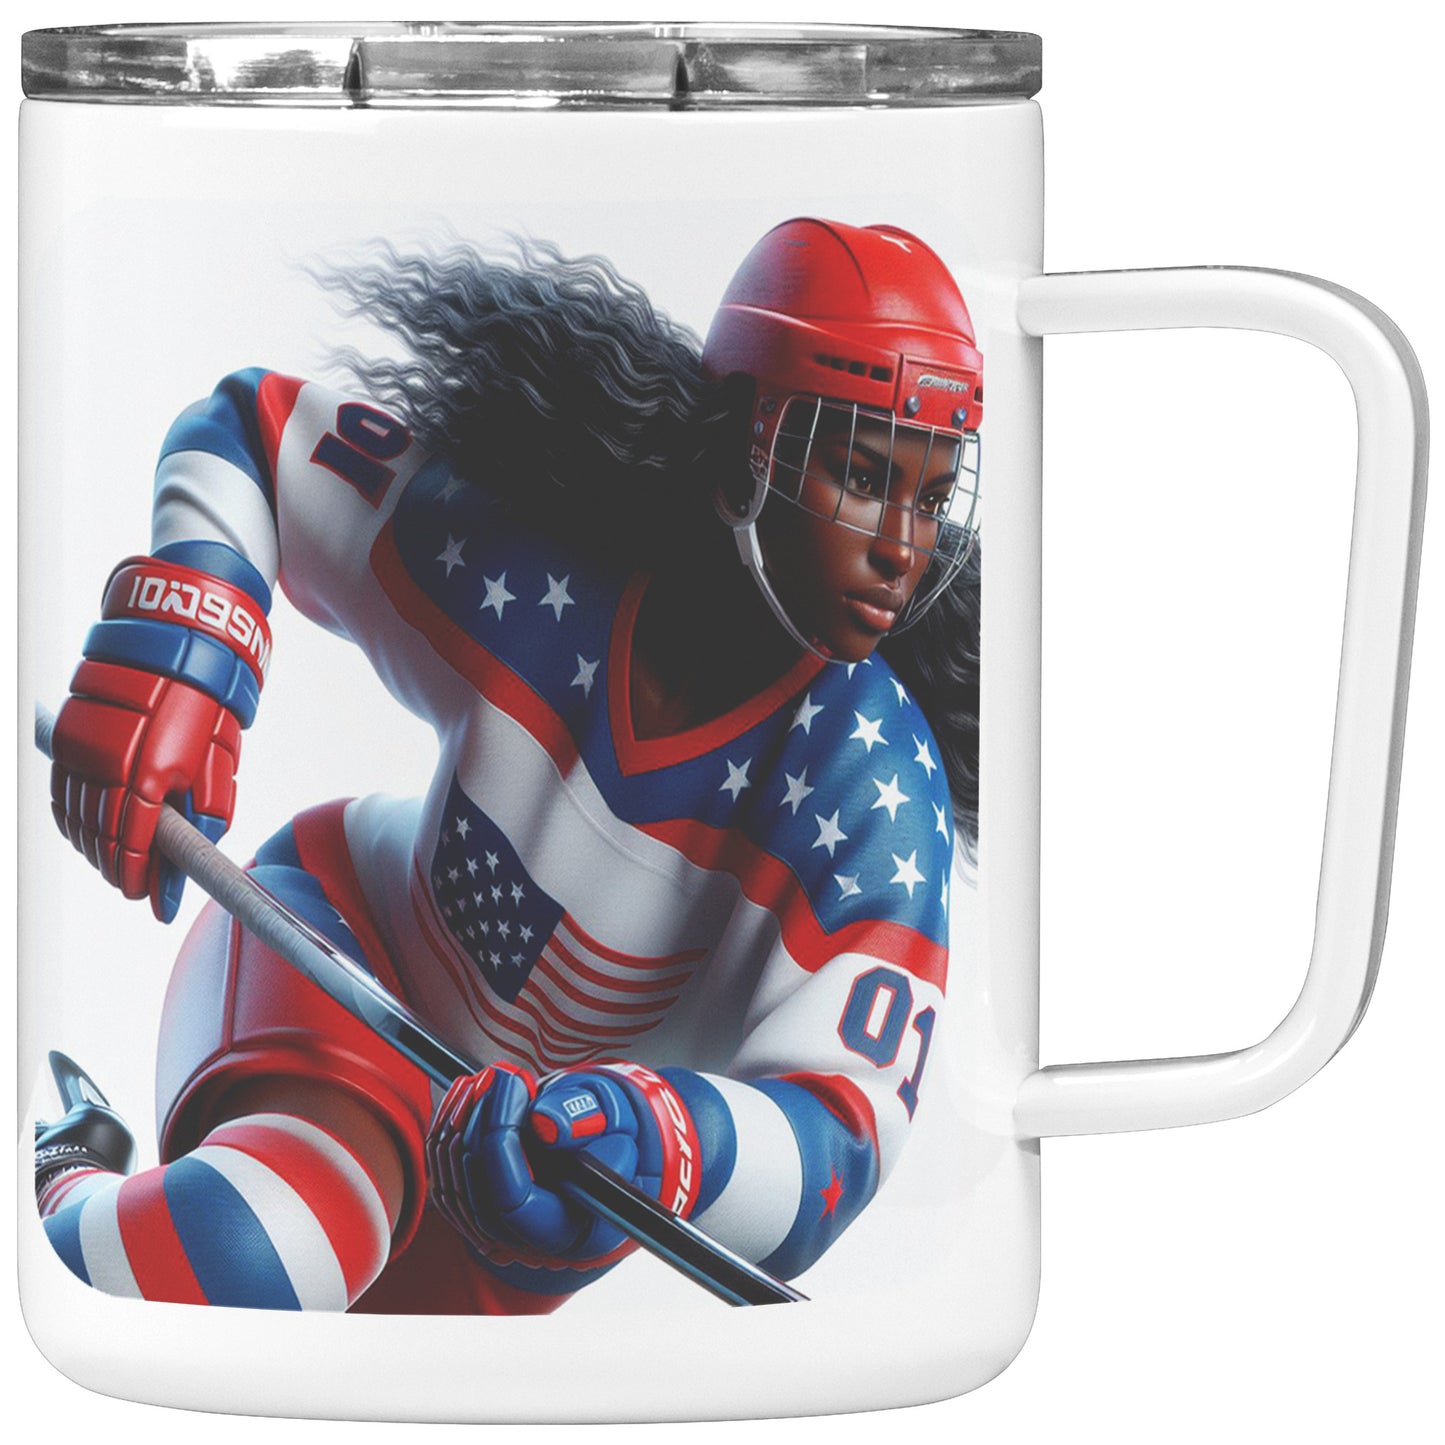 Woman Ice Hockey Player - Coffee Mug #49